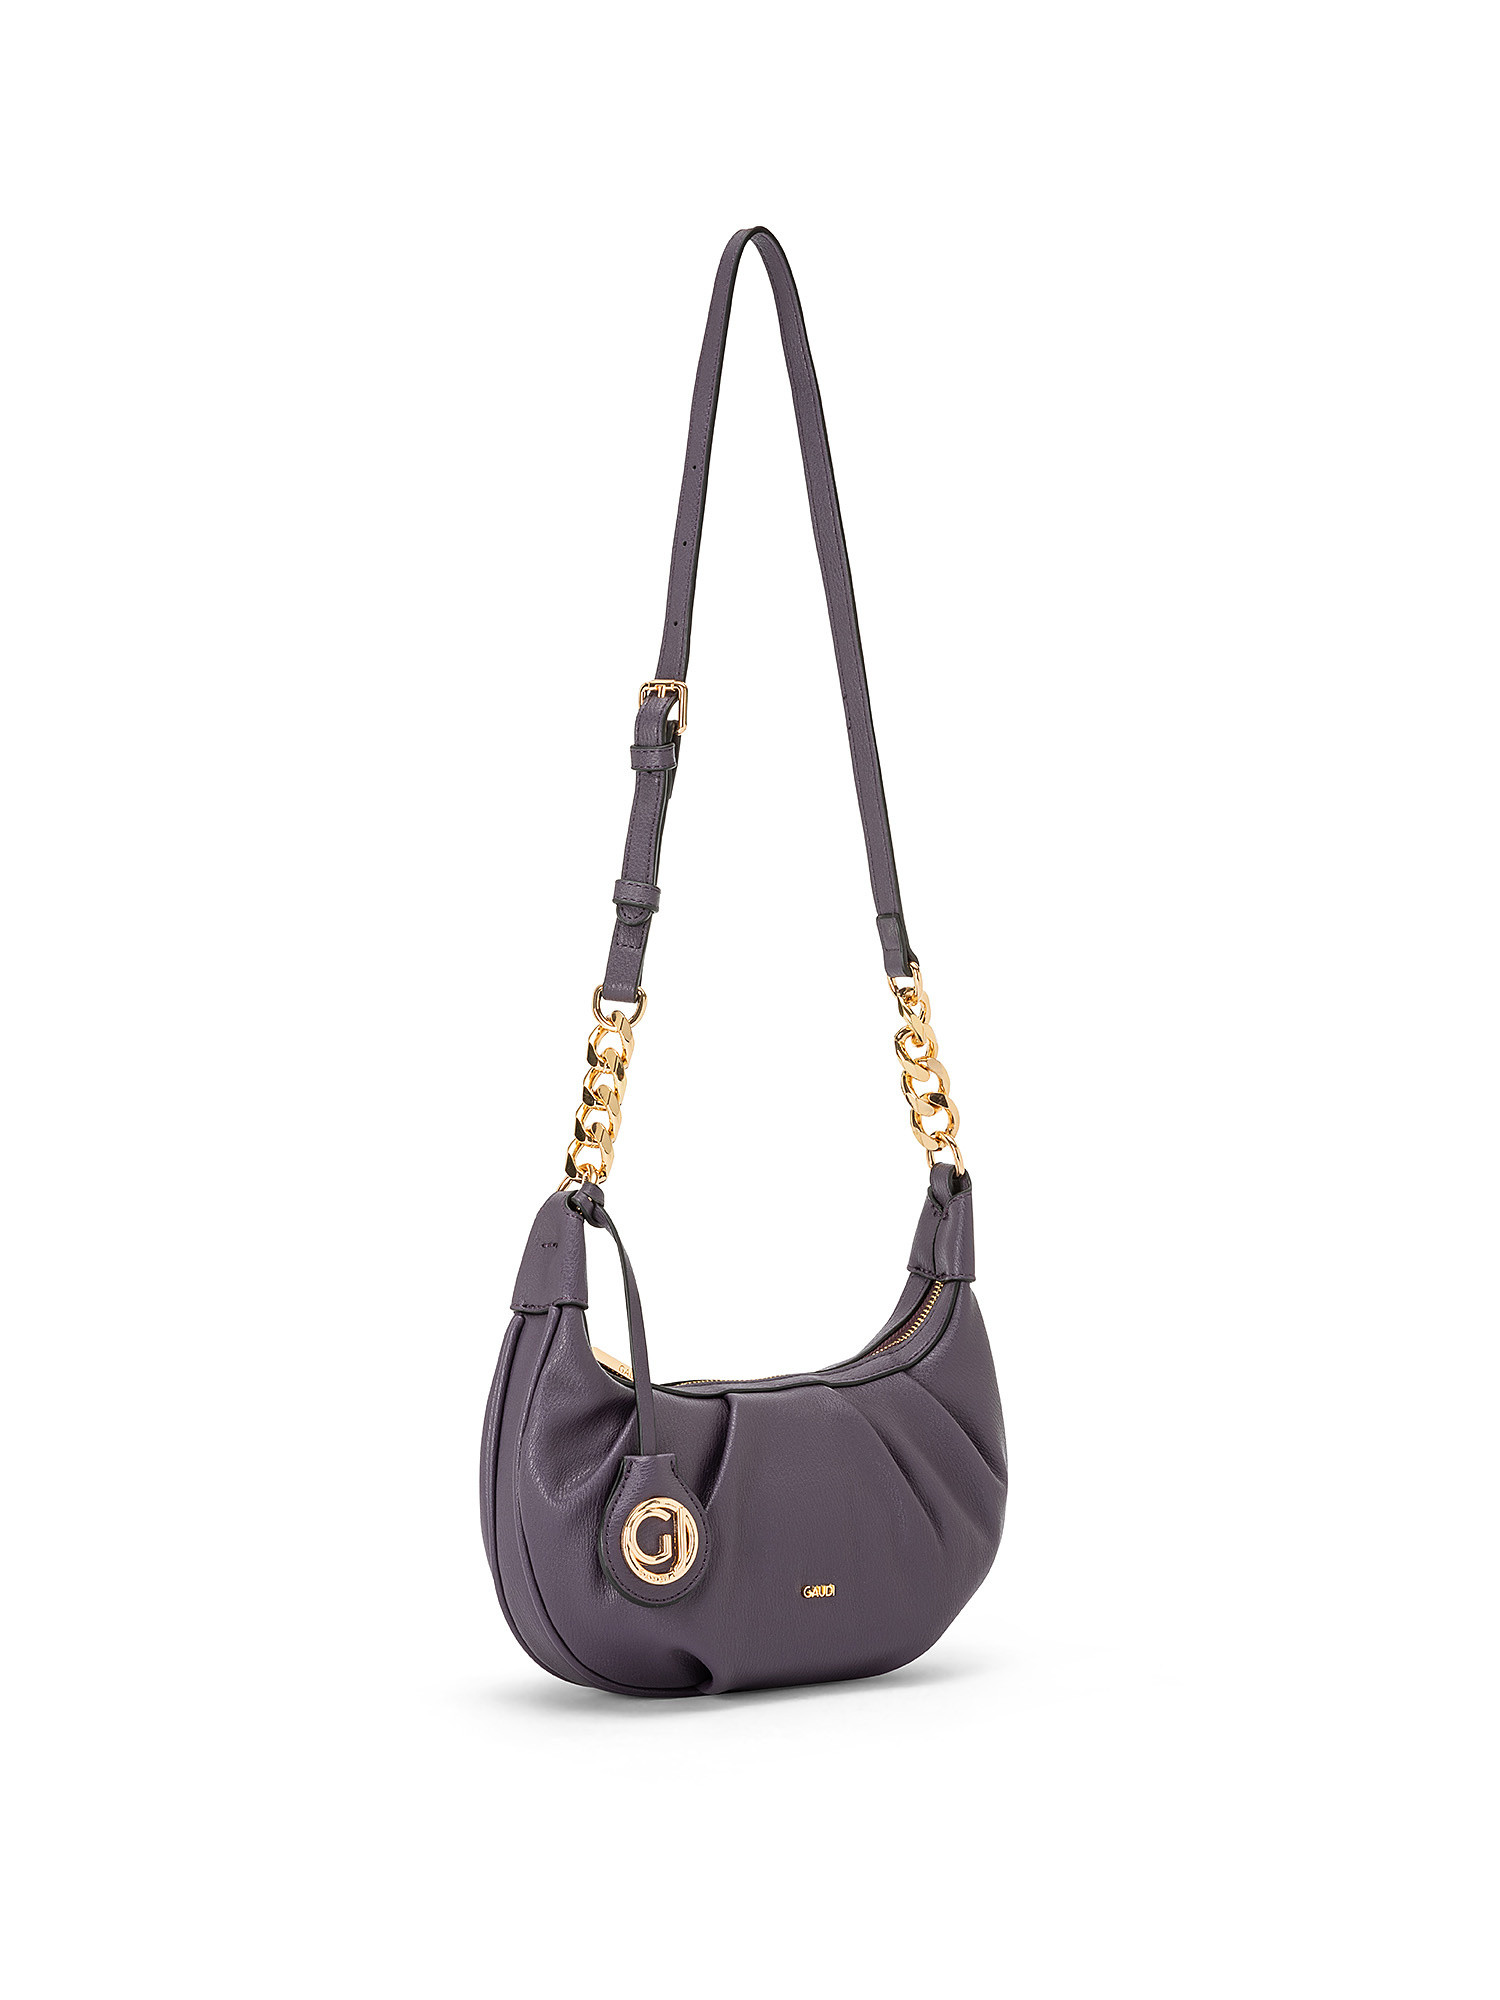 Gaudì - Iris shoulder bag, Purple, large image number 1